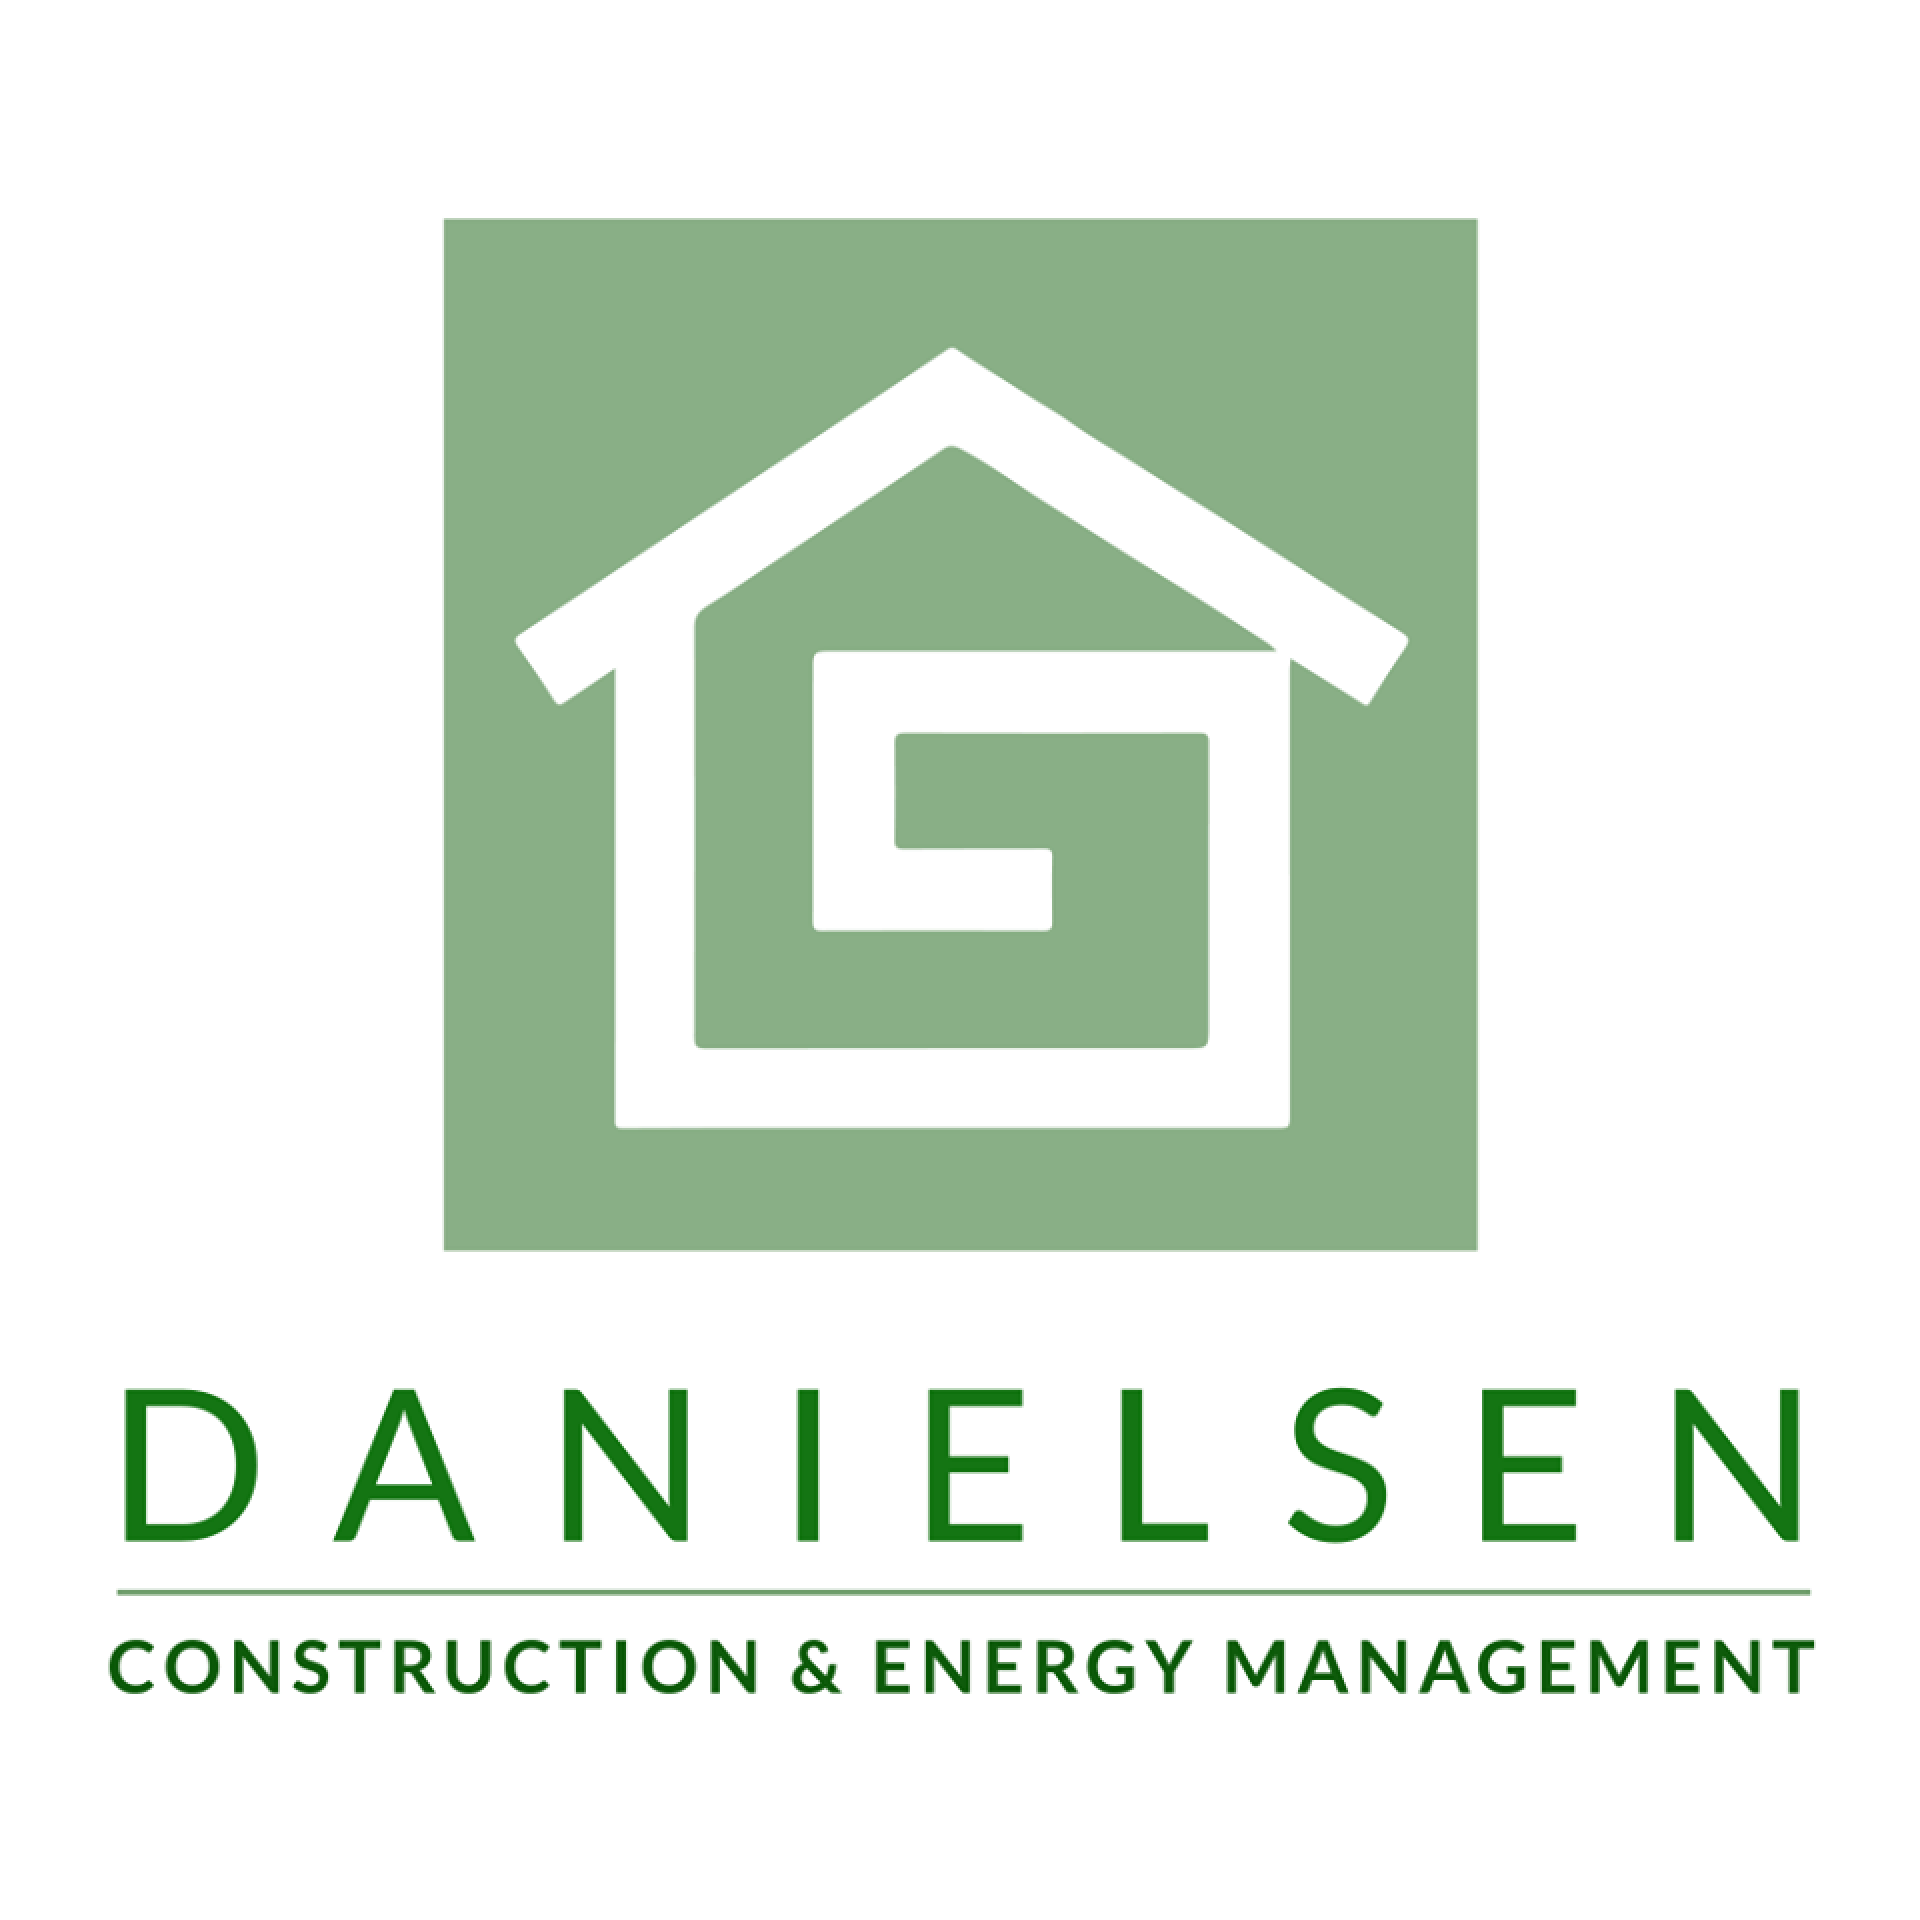 Danielsen Construction & Energy Management compnay logo